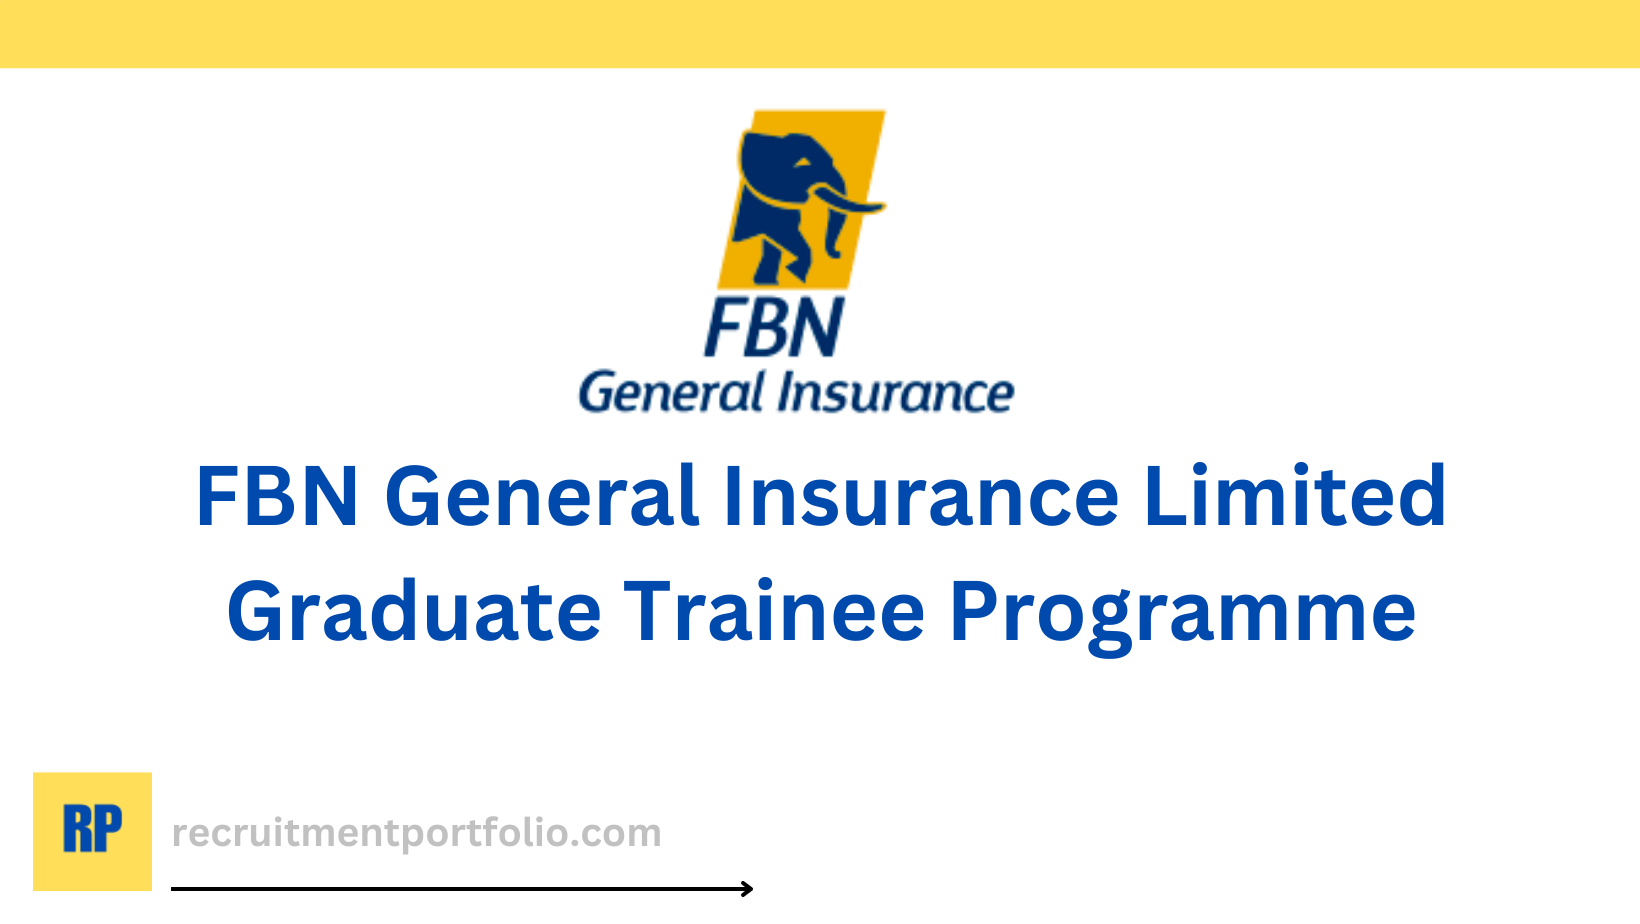 FBN General Insurance Limited Graduate Trainee Programme